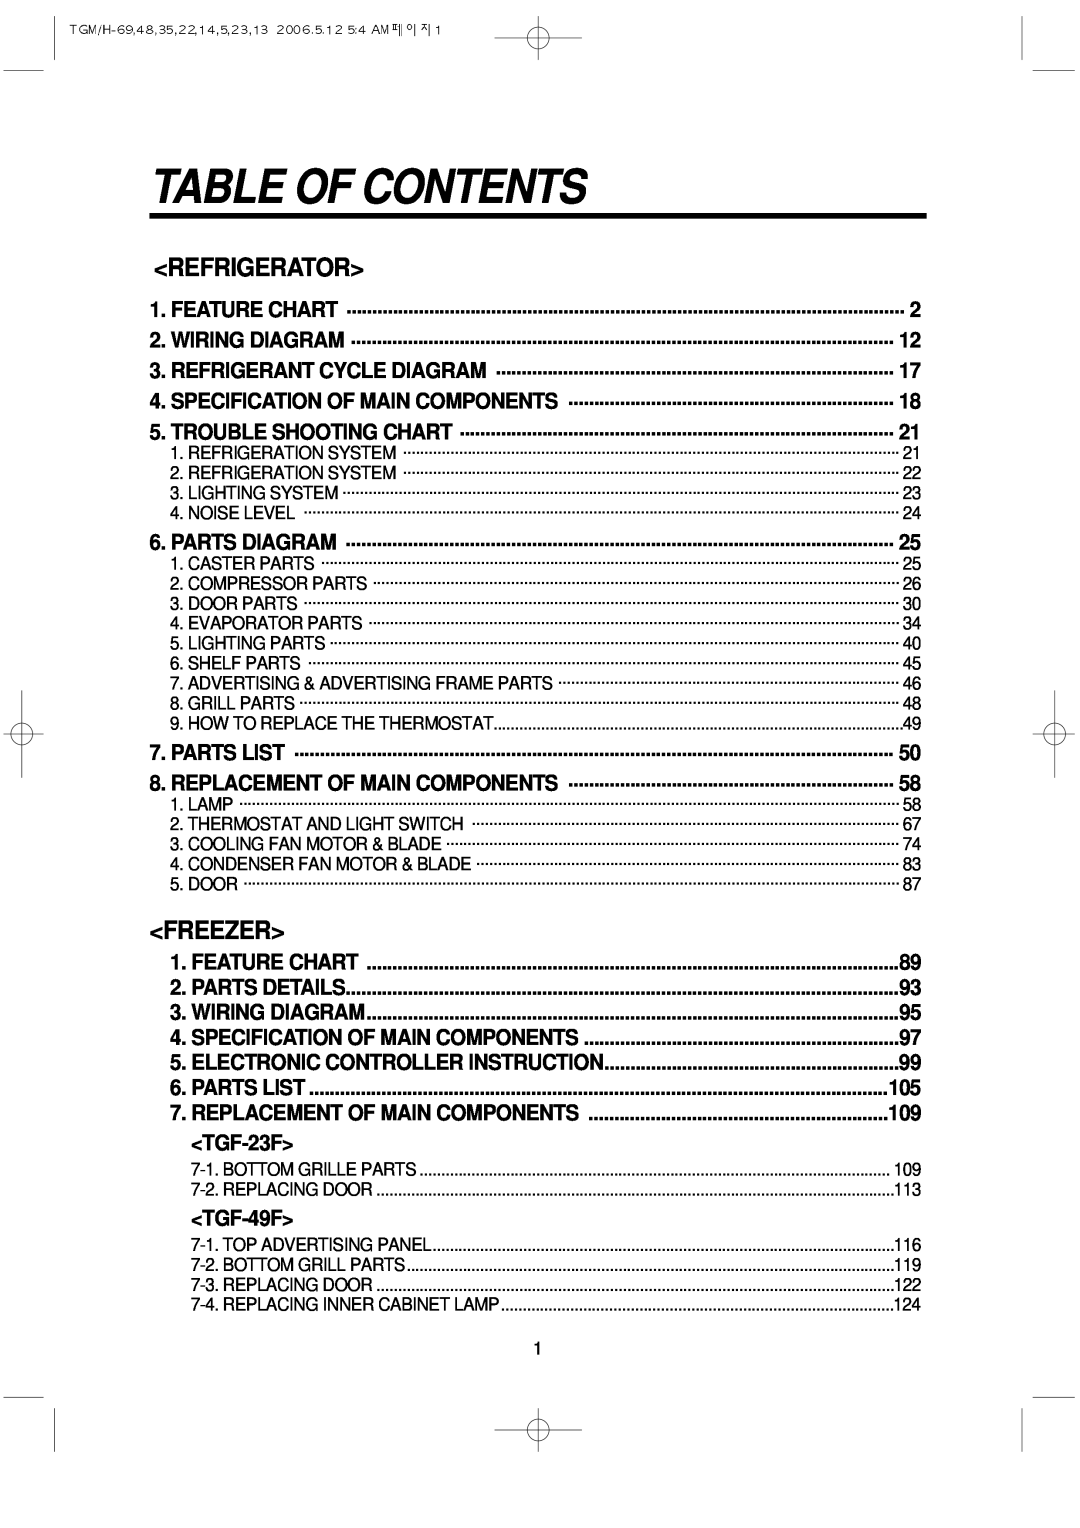 Turbo Air TGM-11RV Table Of Contents, Refrigerator, Freezer, Parts Diagram, TGF-23F, TGF-49F, Refrigerant Cycle Diagram 